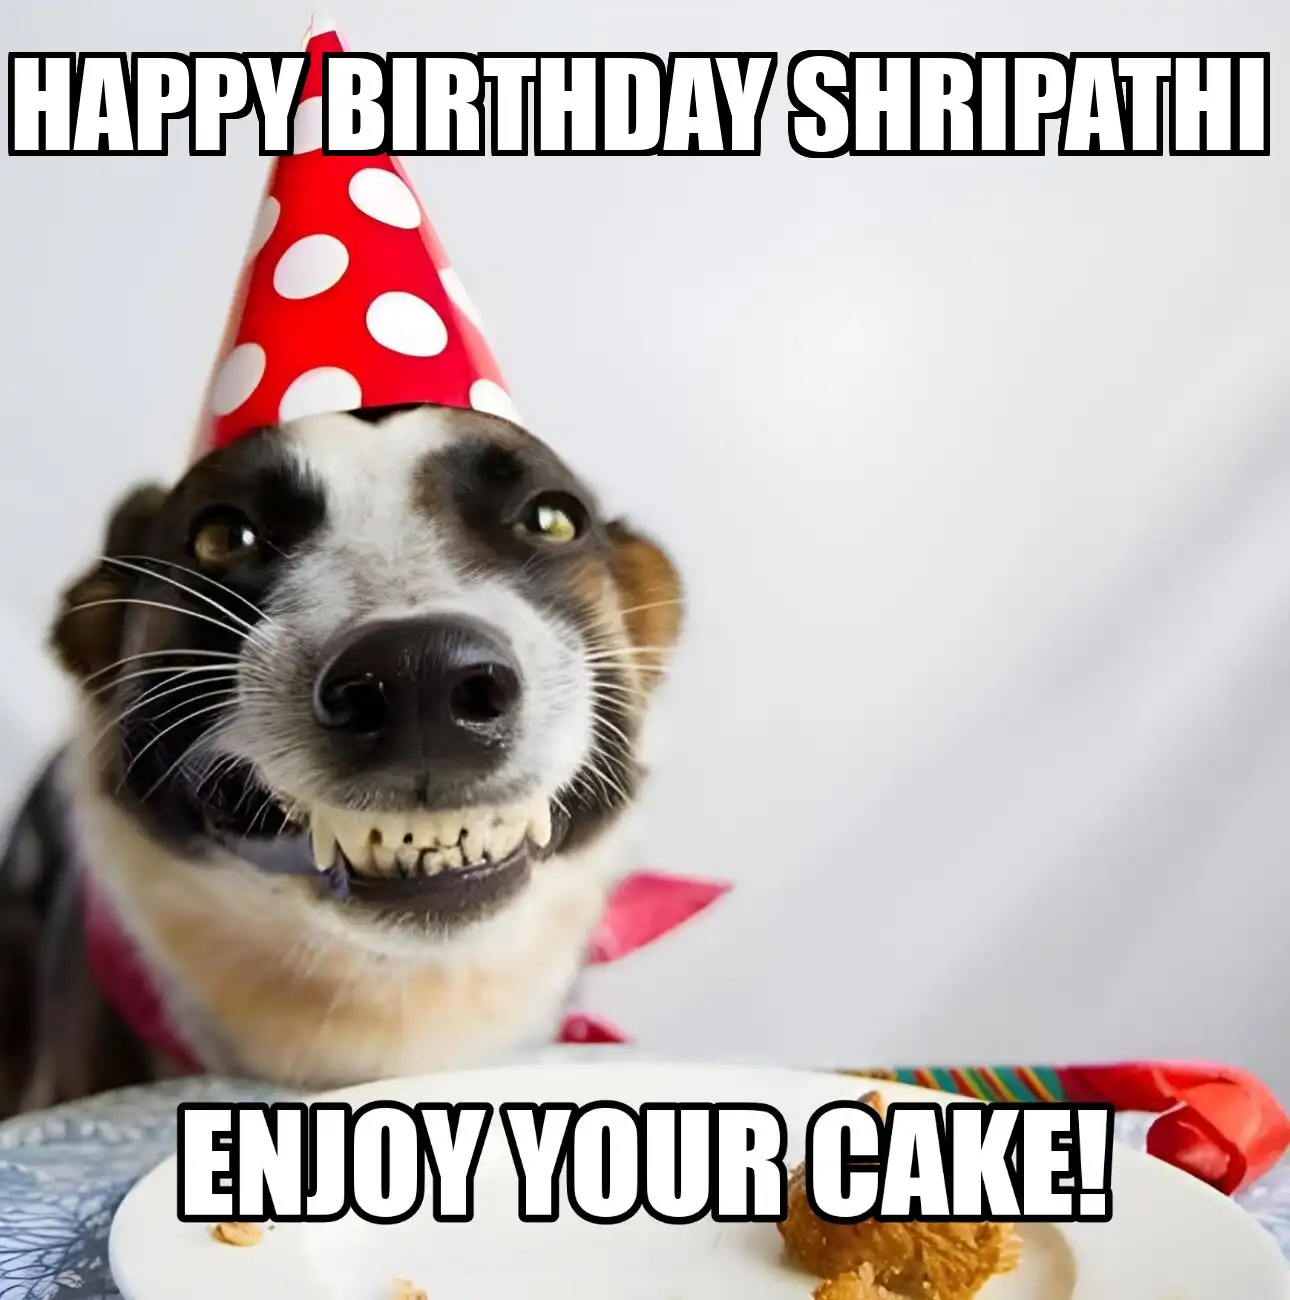 Happy Birthday Shripathi Enjoy Your Cake Dog Meme